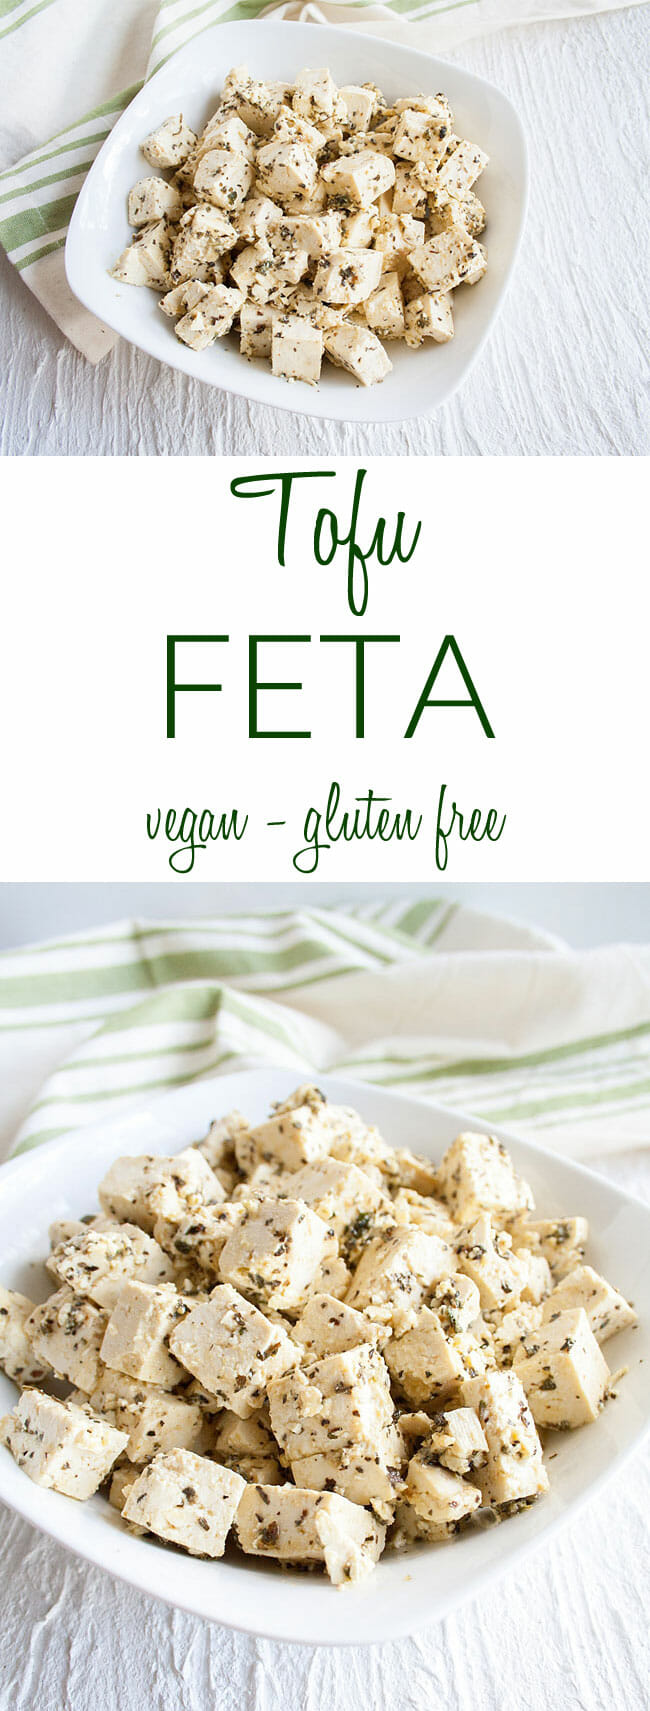 Tofu Feta collage photo with text.